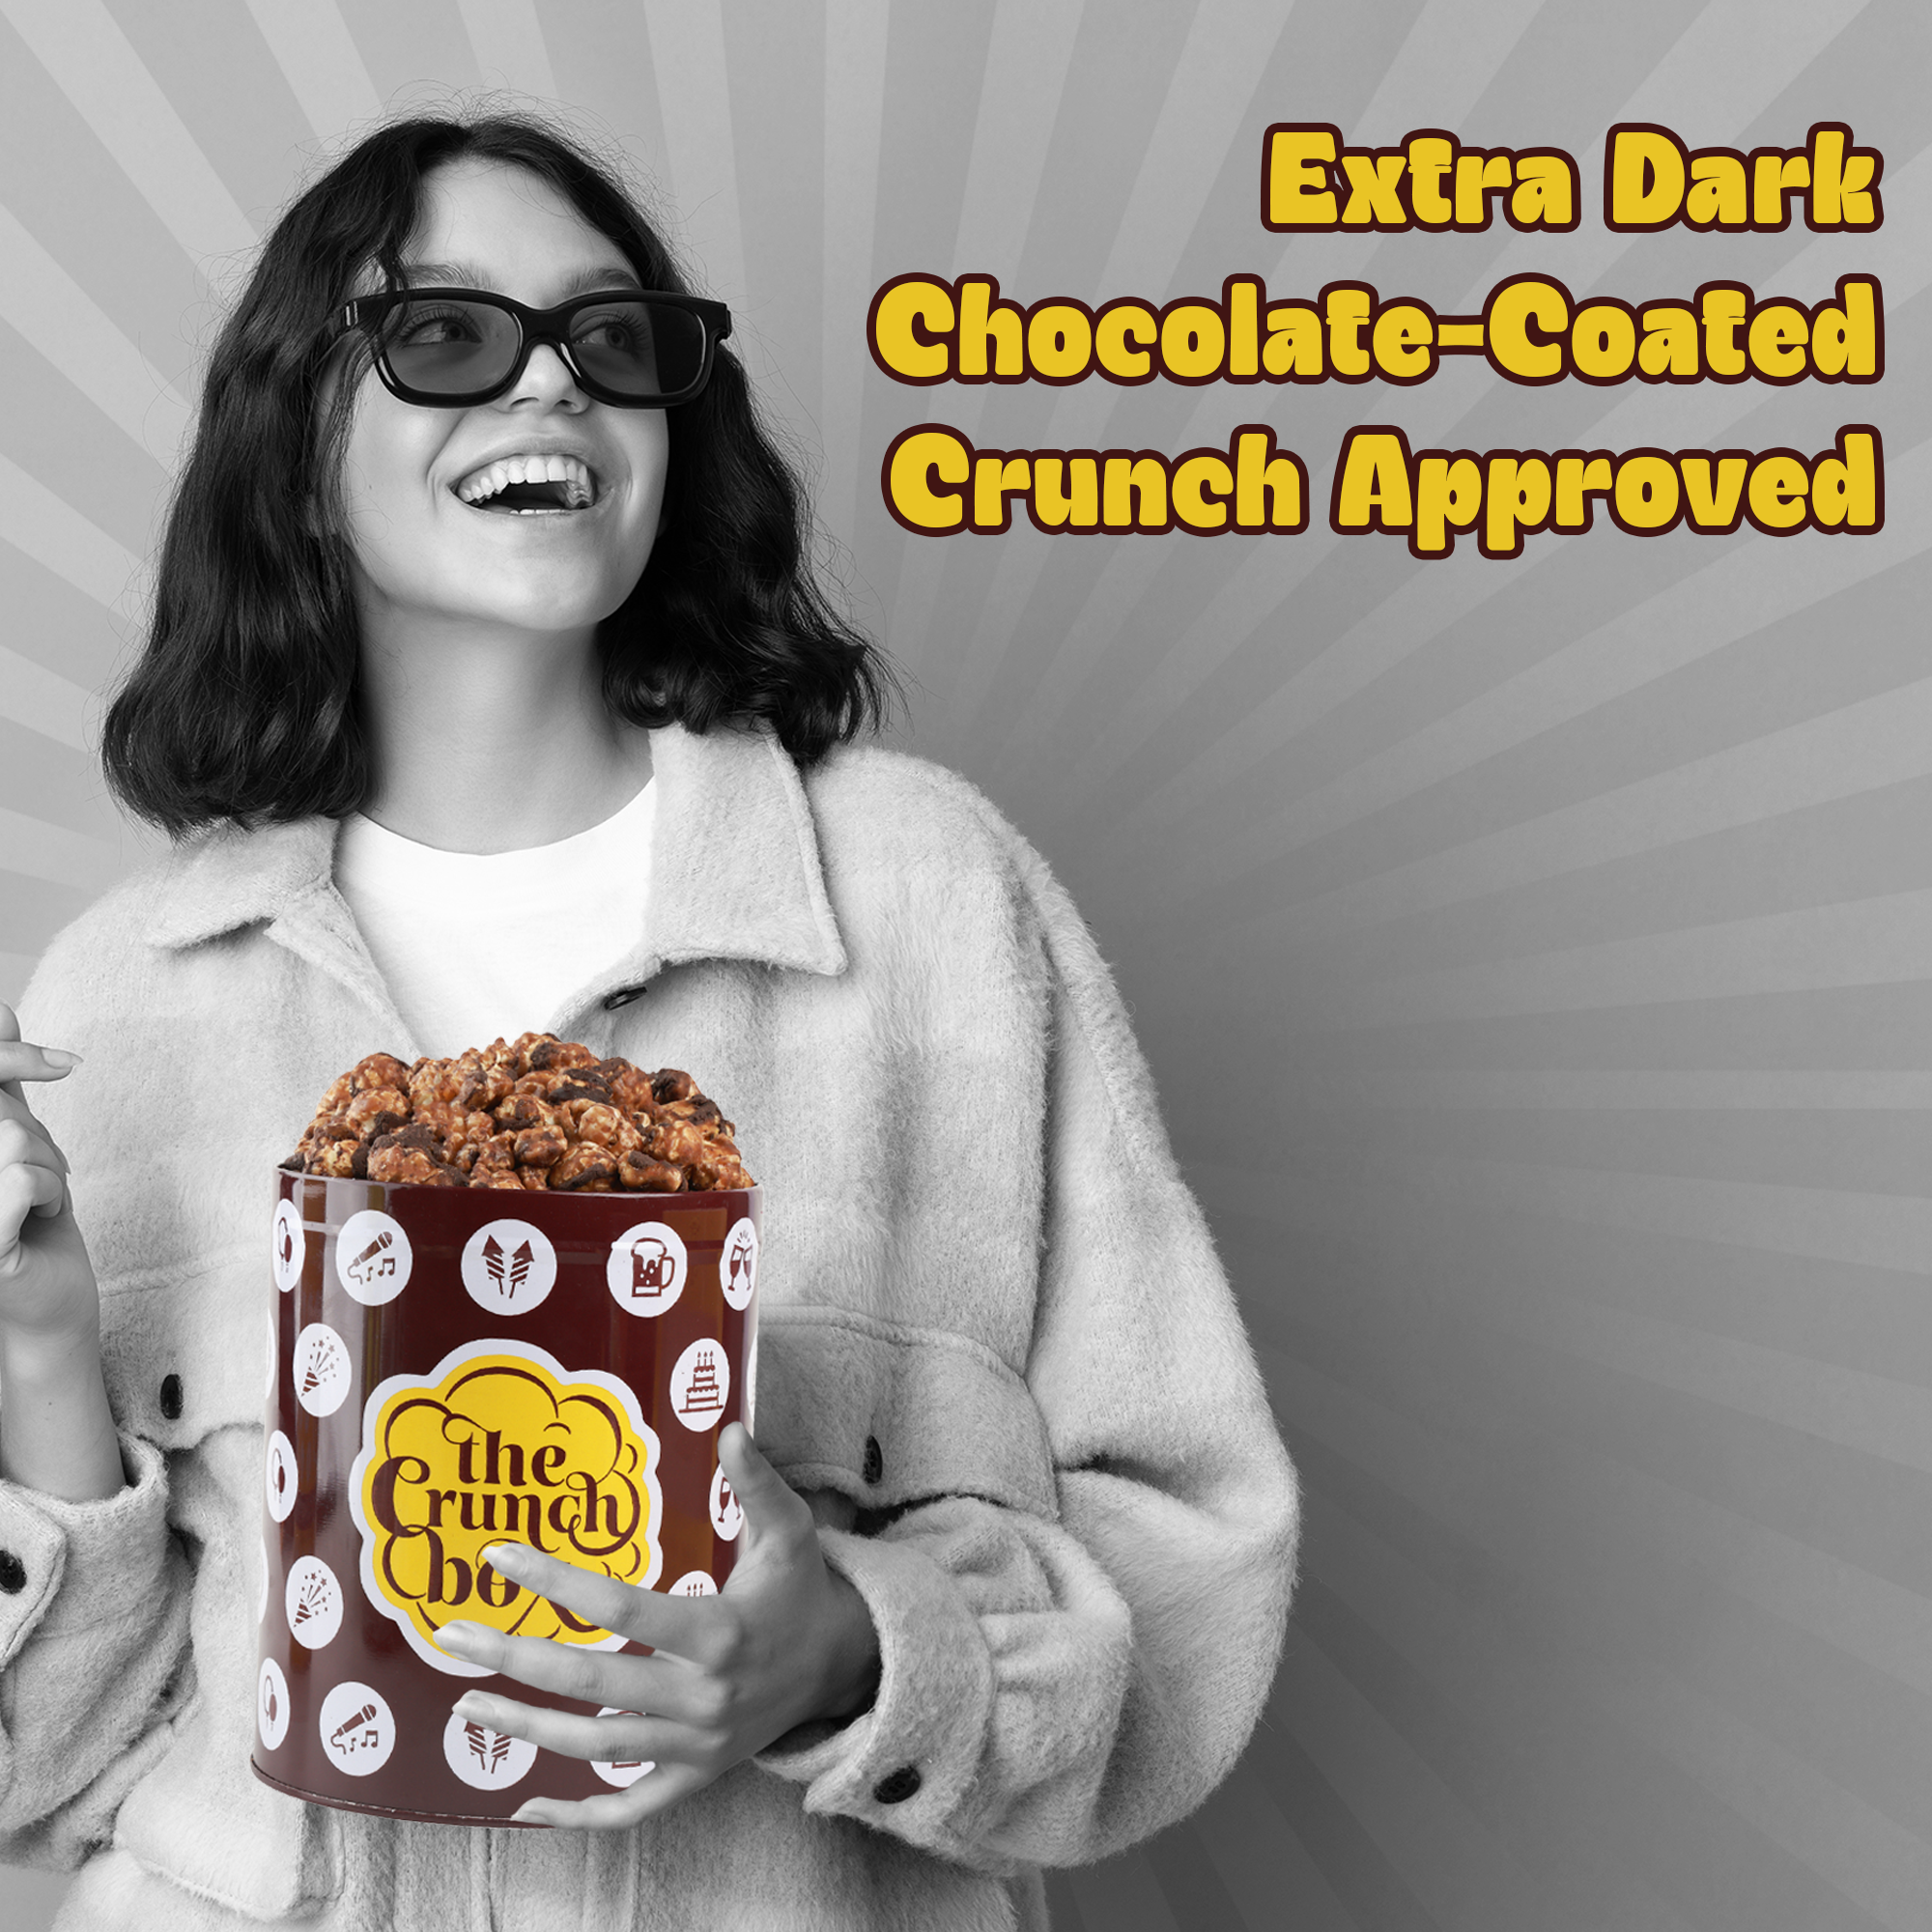 Dark Chocolate Overload